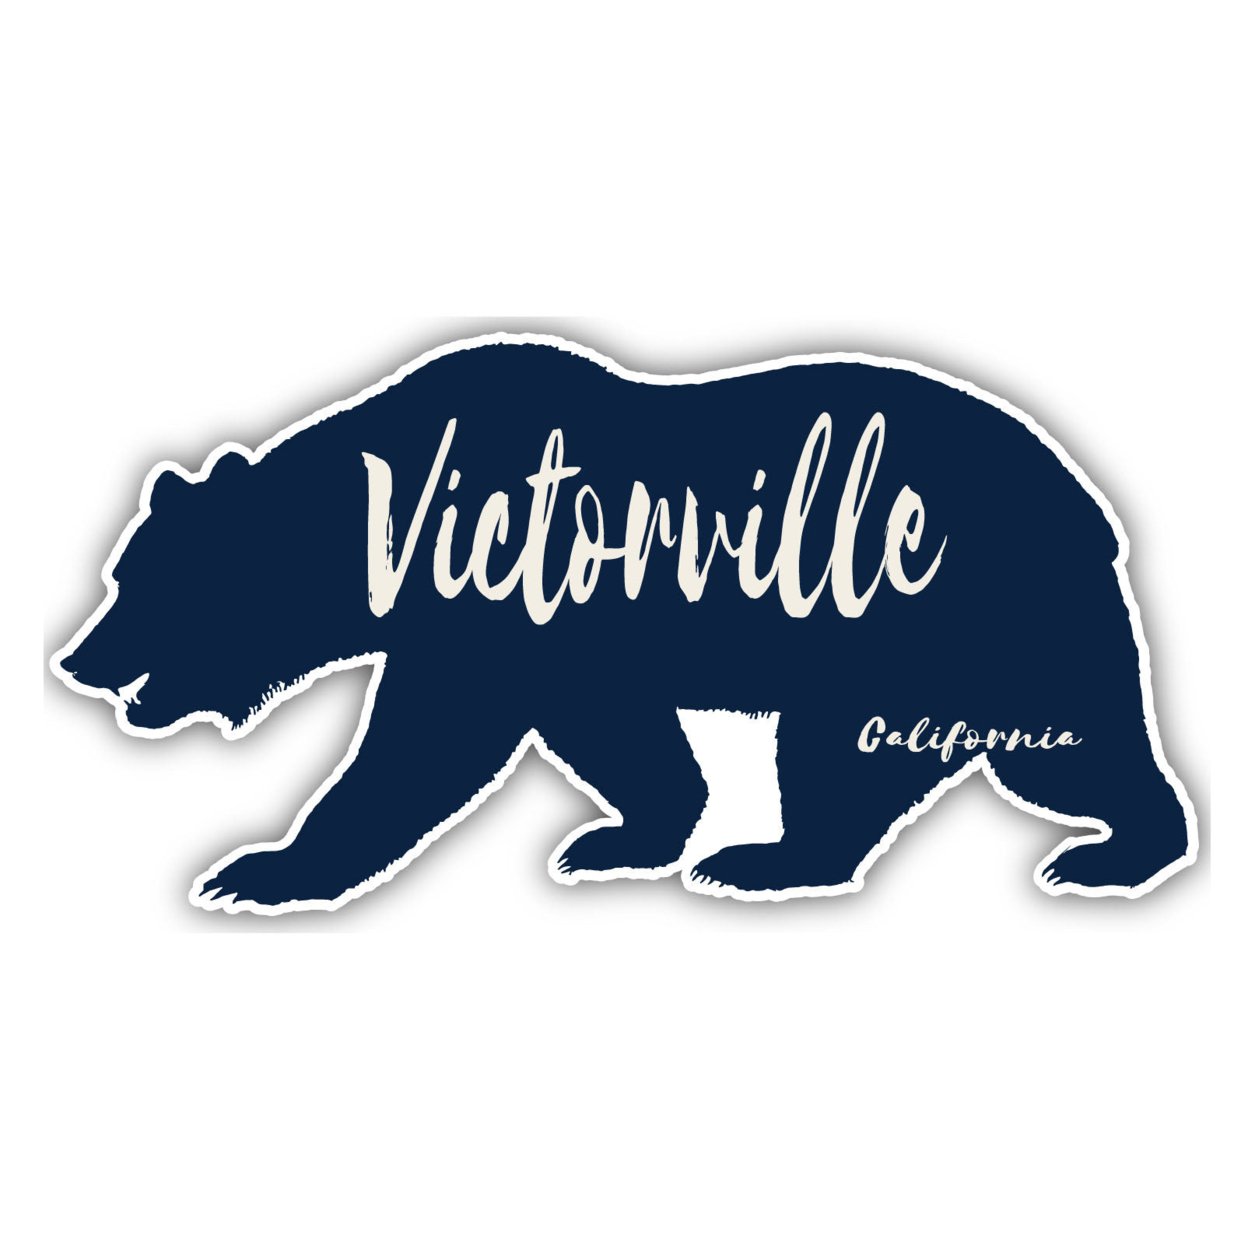 Victorville California Souvenir Decorative Stickers (Choose Theme And Size) - Single Unit, 4-Inch, Bear